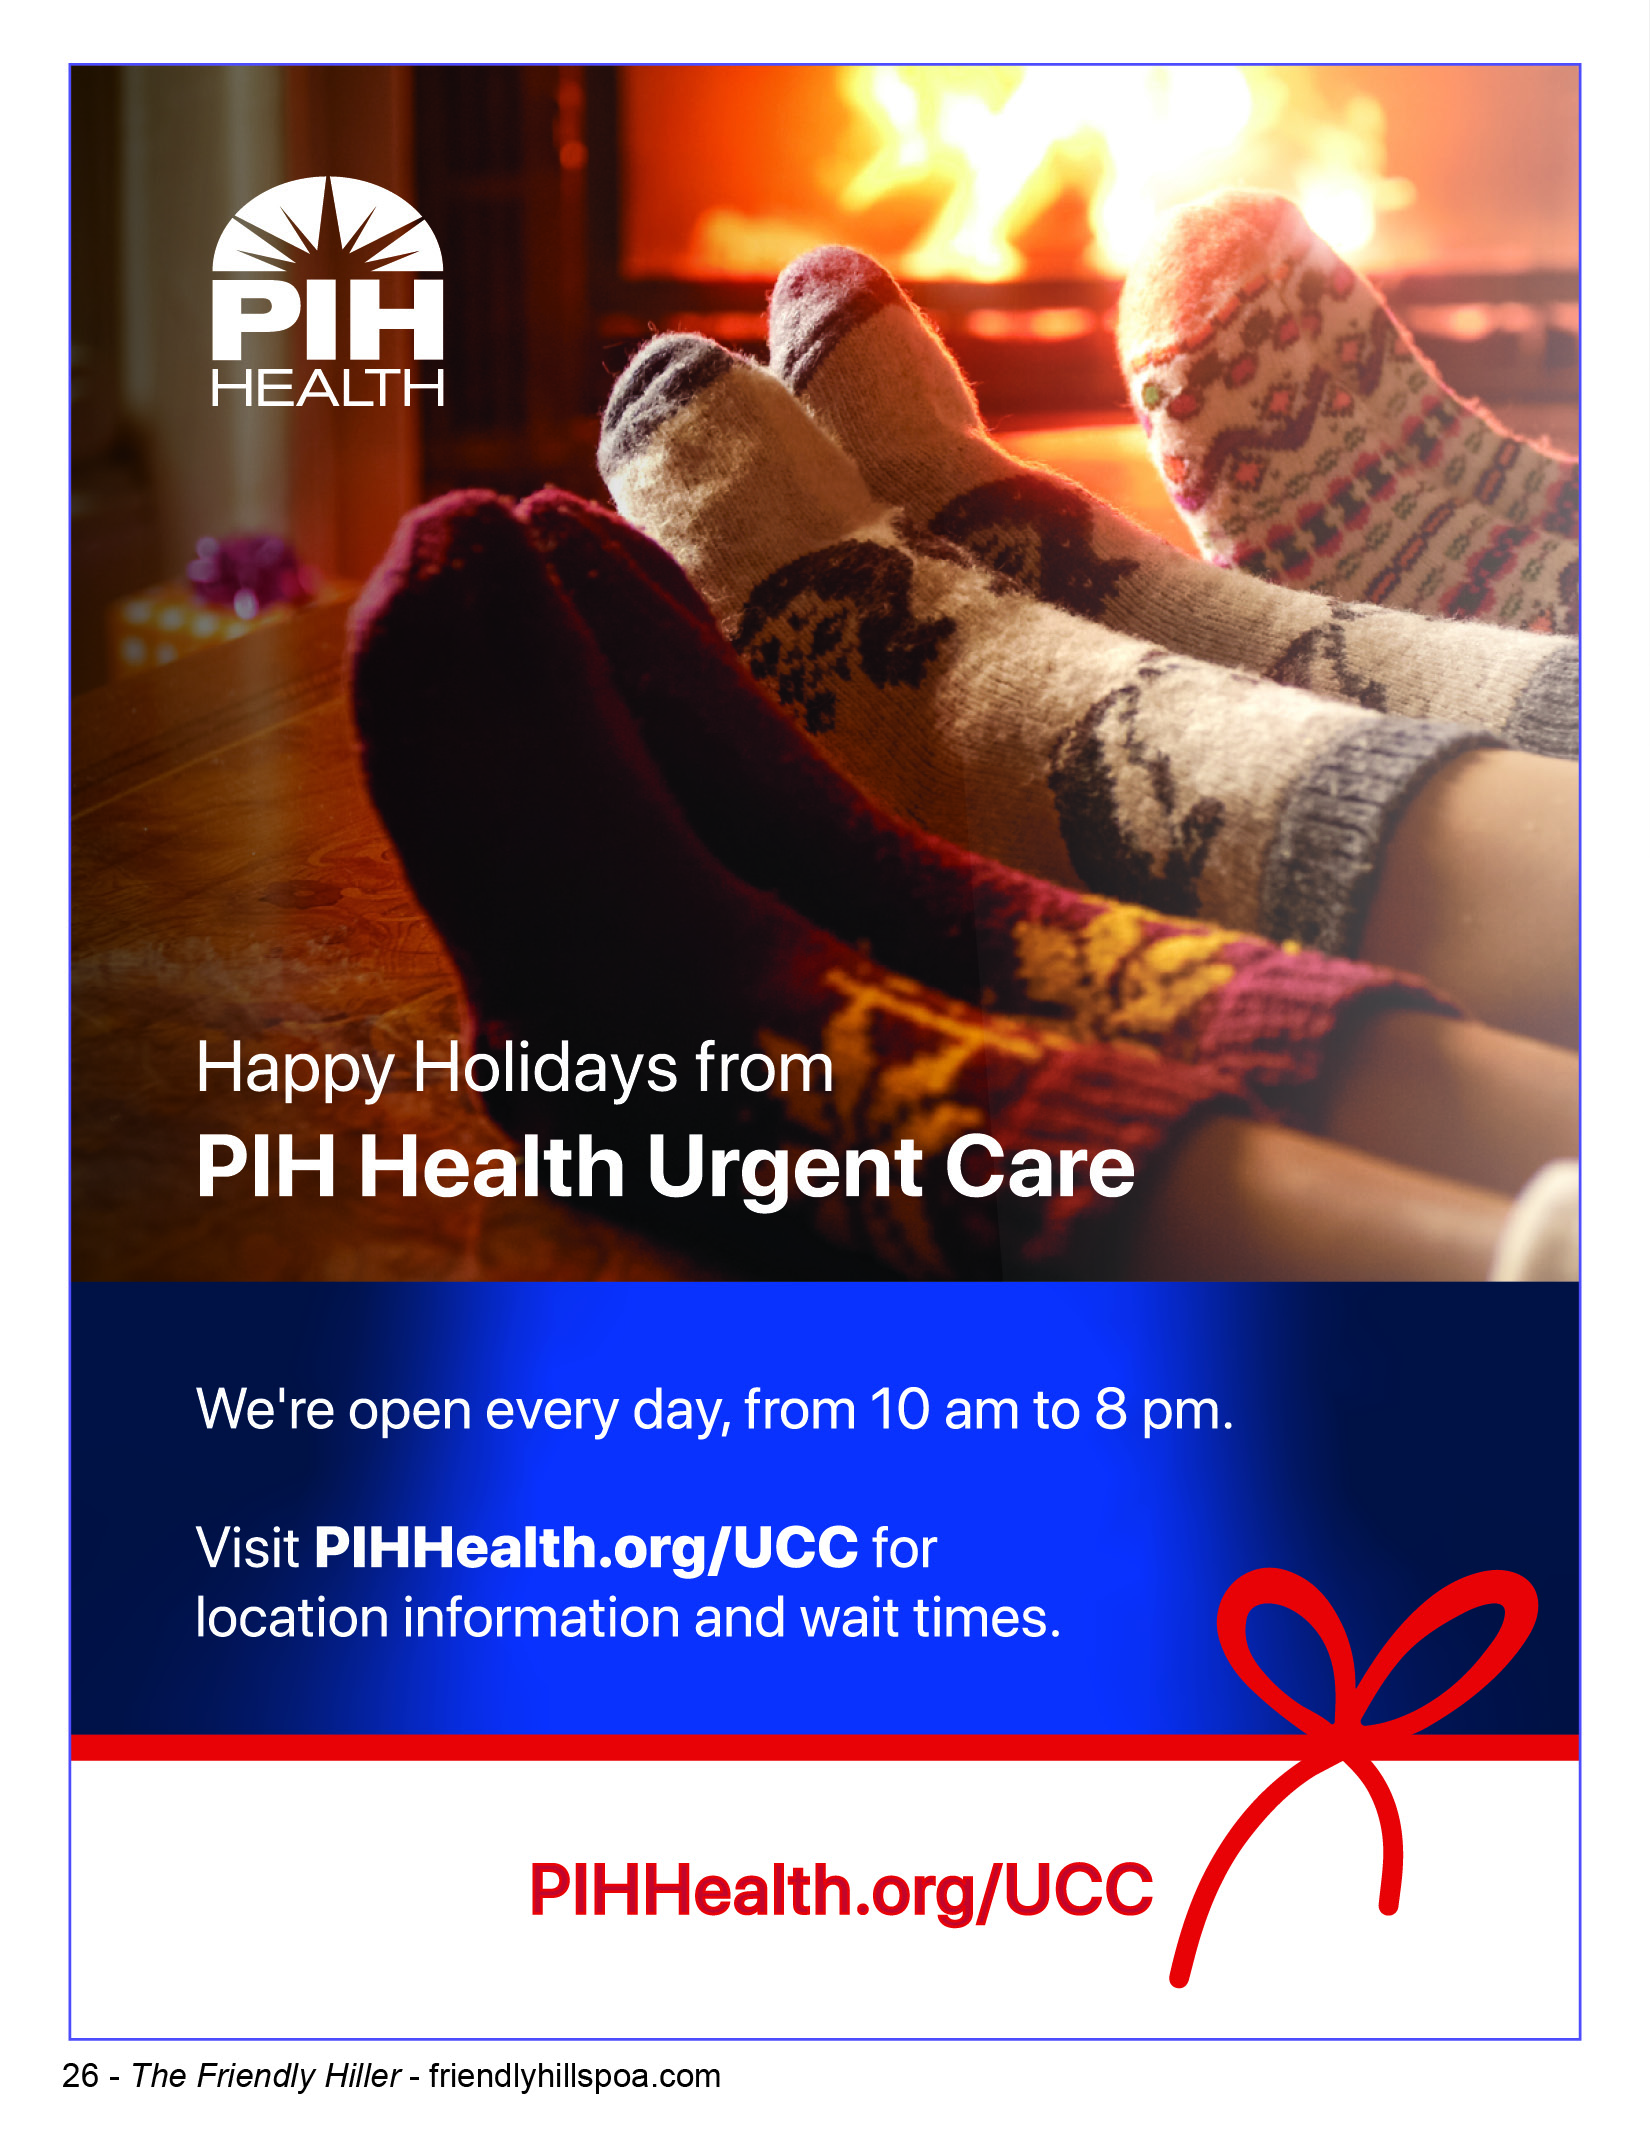 PIH Health Urgent Care Happy Holidays